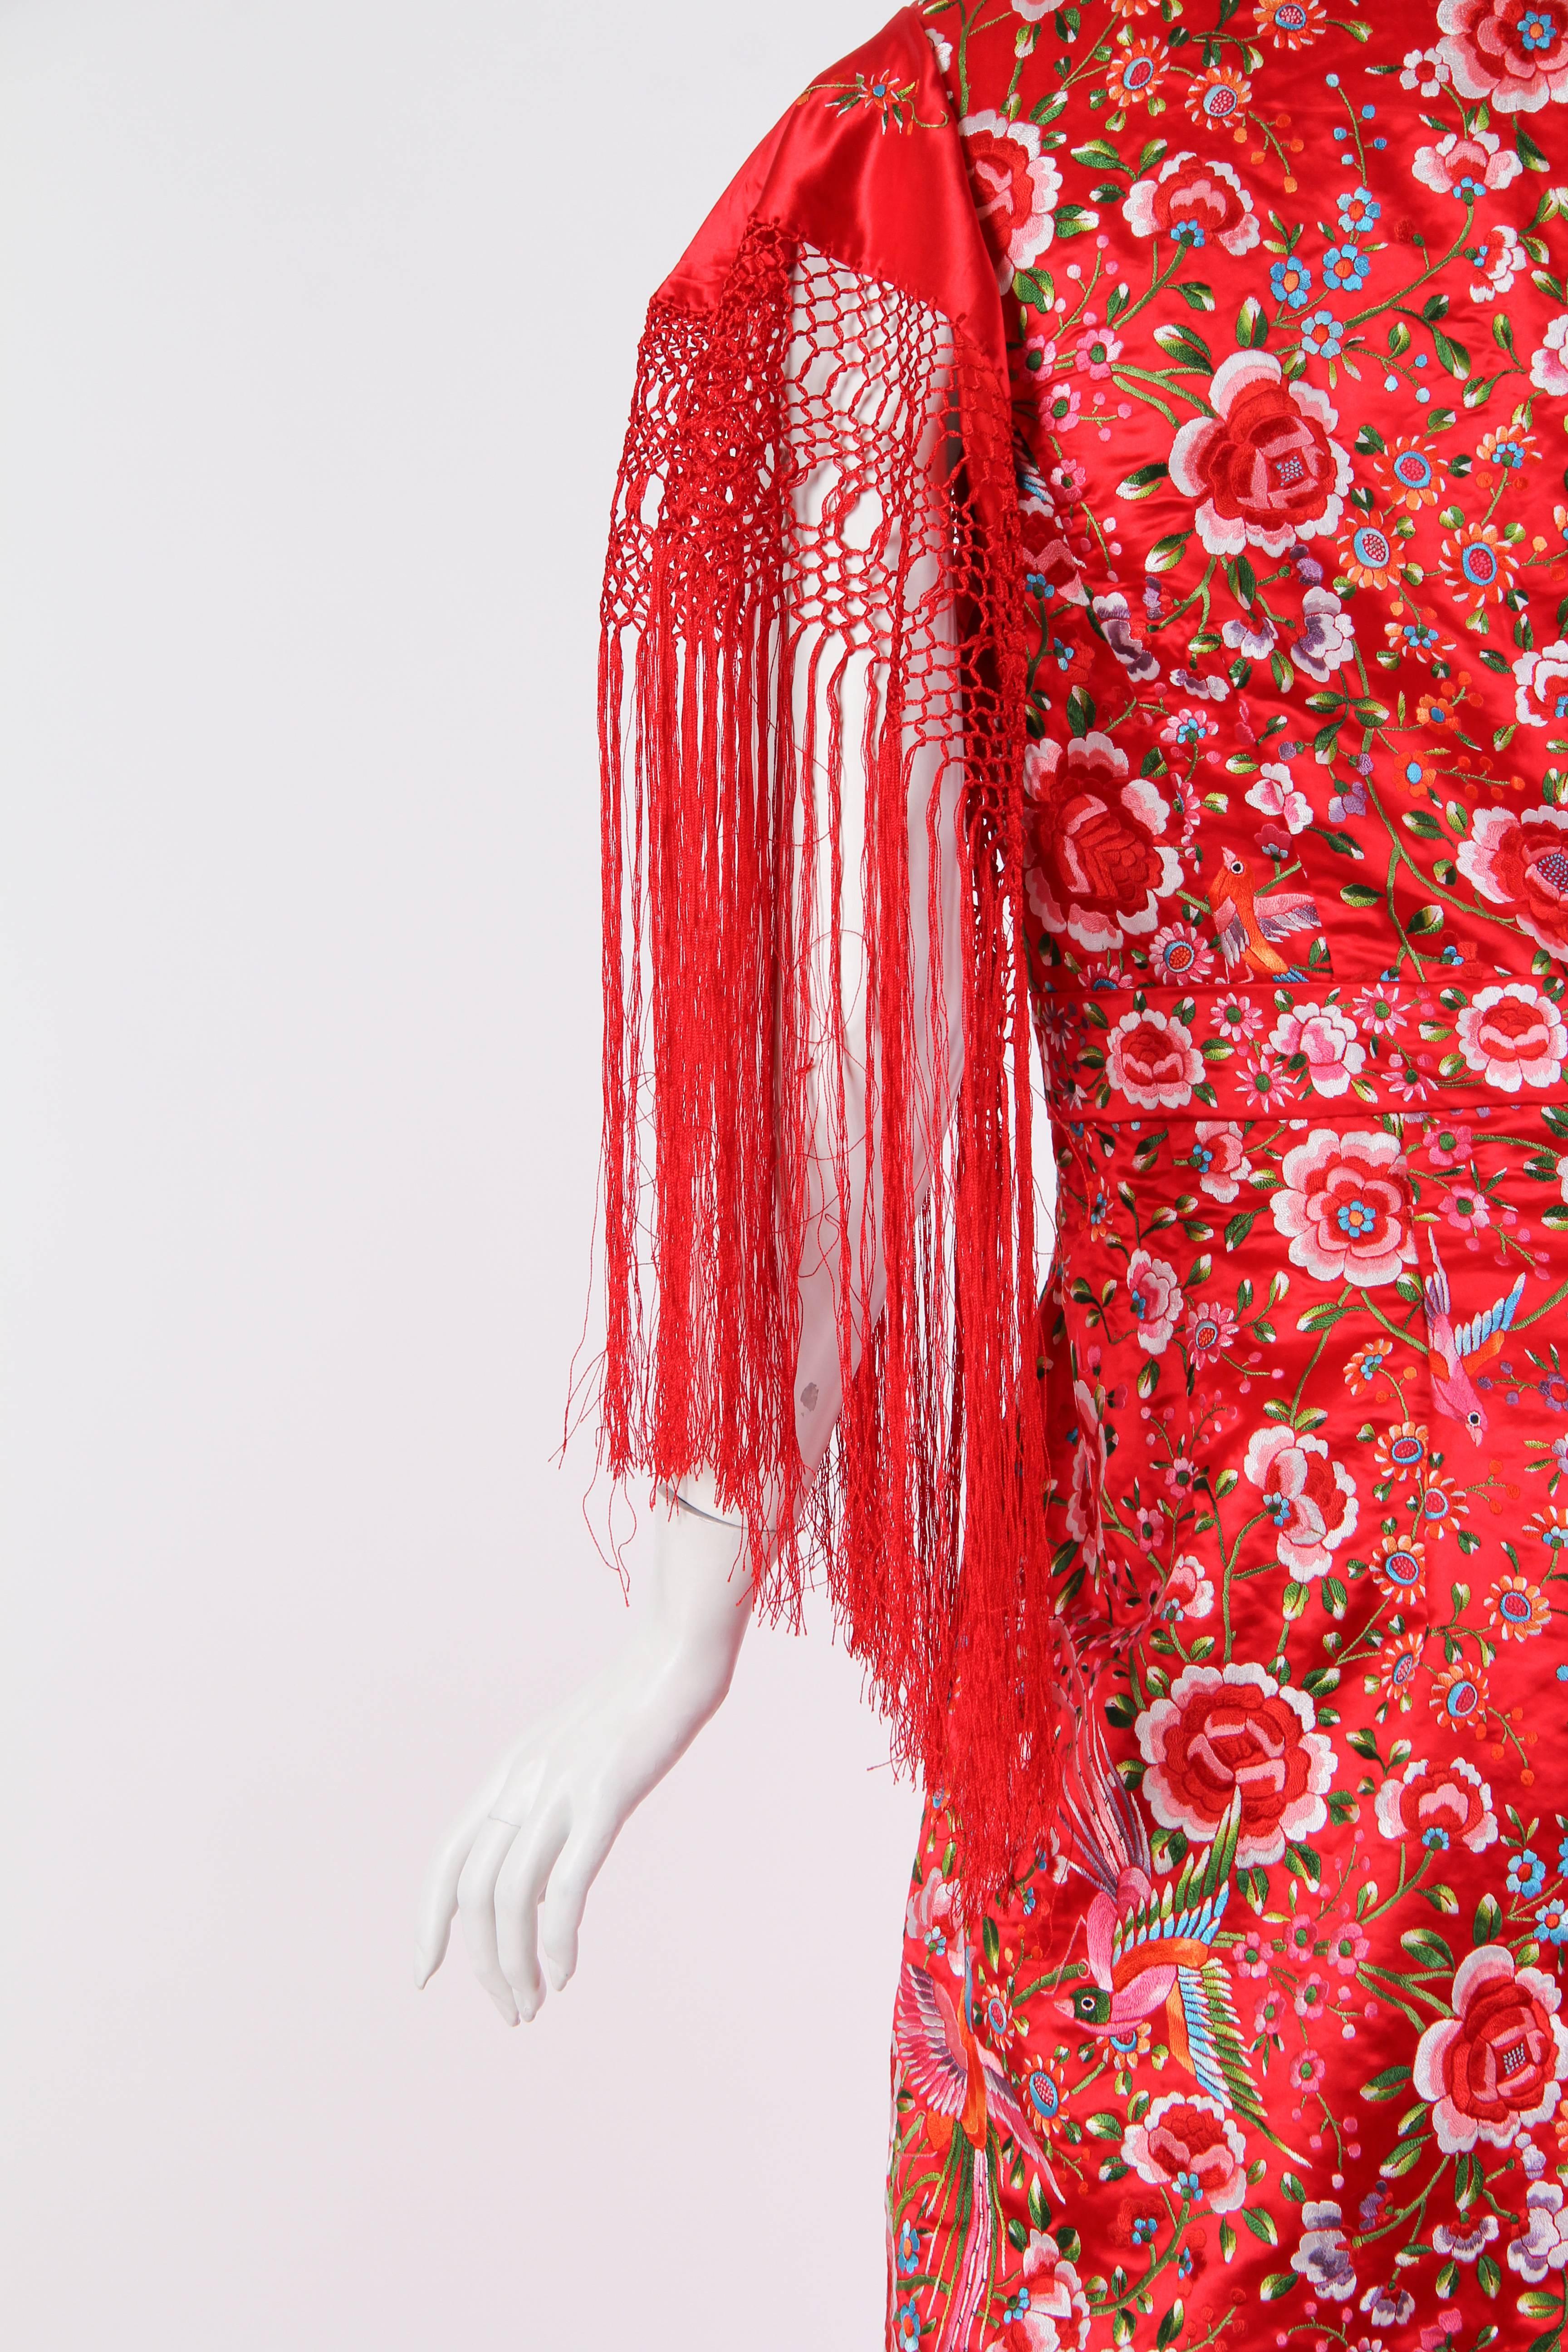 Phenomenal Hand-Embroidered Chinese Shawl Dress with Fringe 3